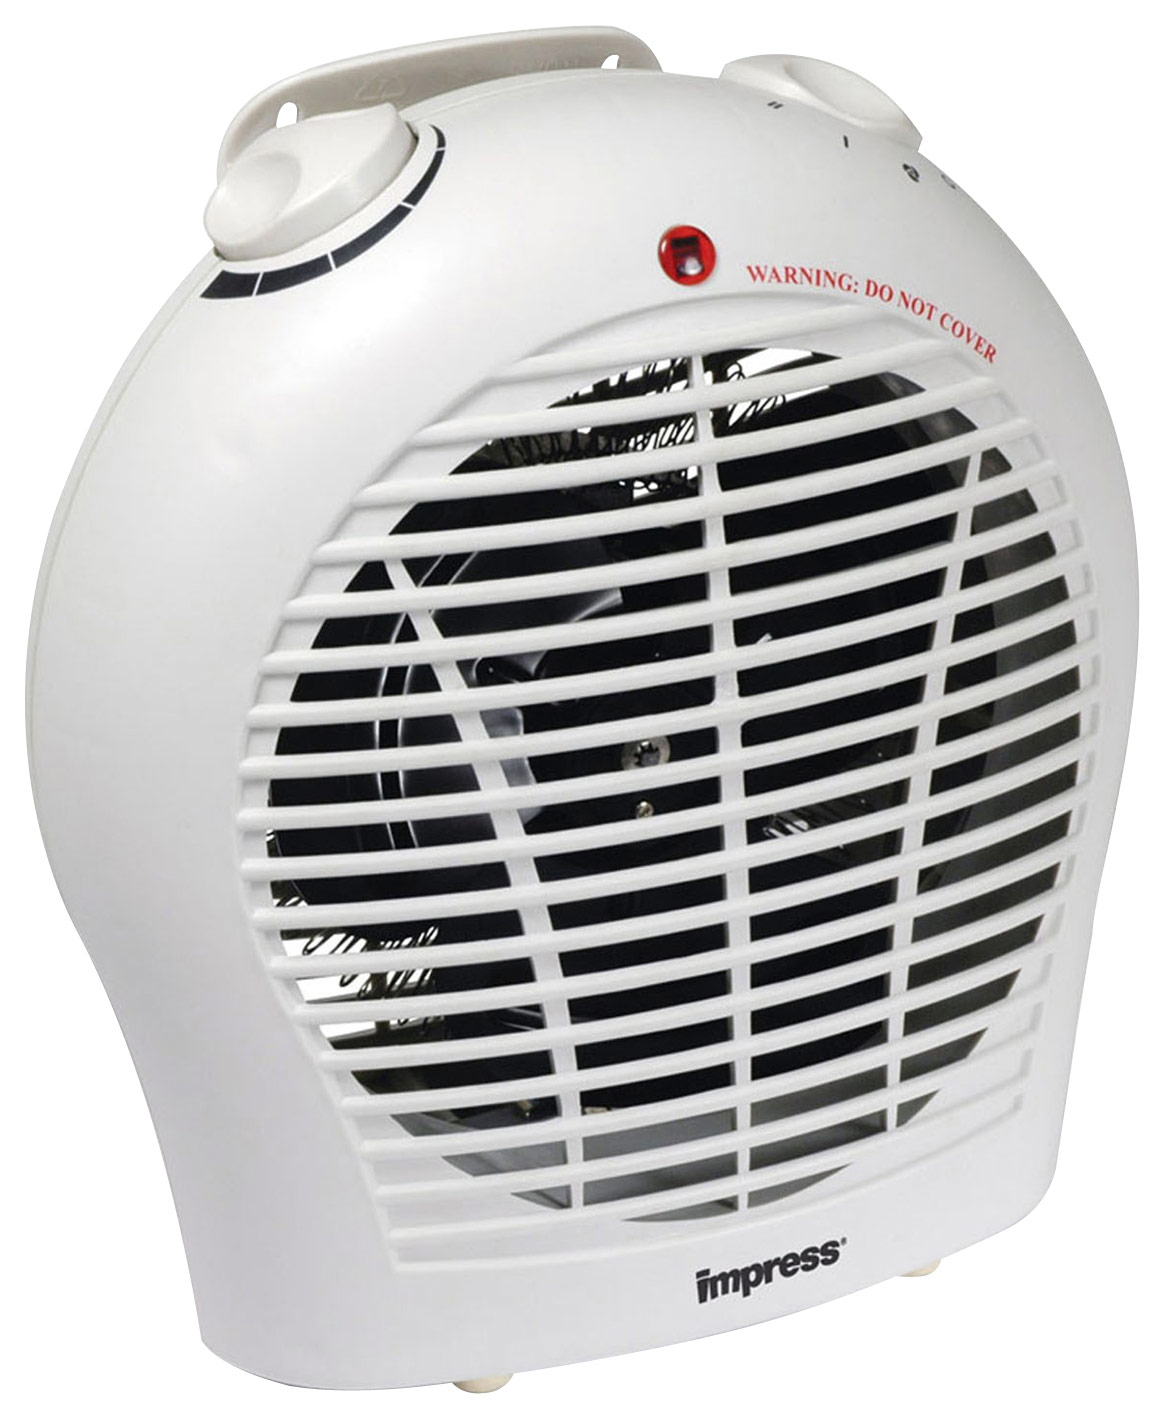 Impress - Electric Fan Heater - White was $24.99 now $17.99 (28.0% off)